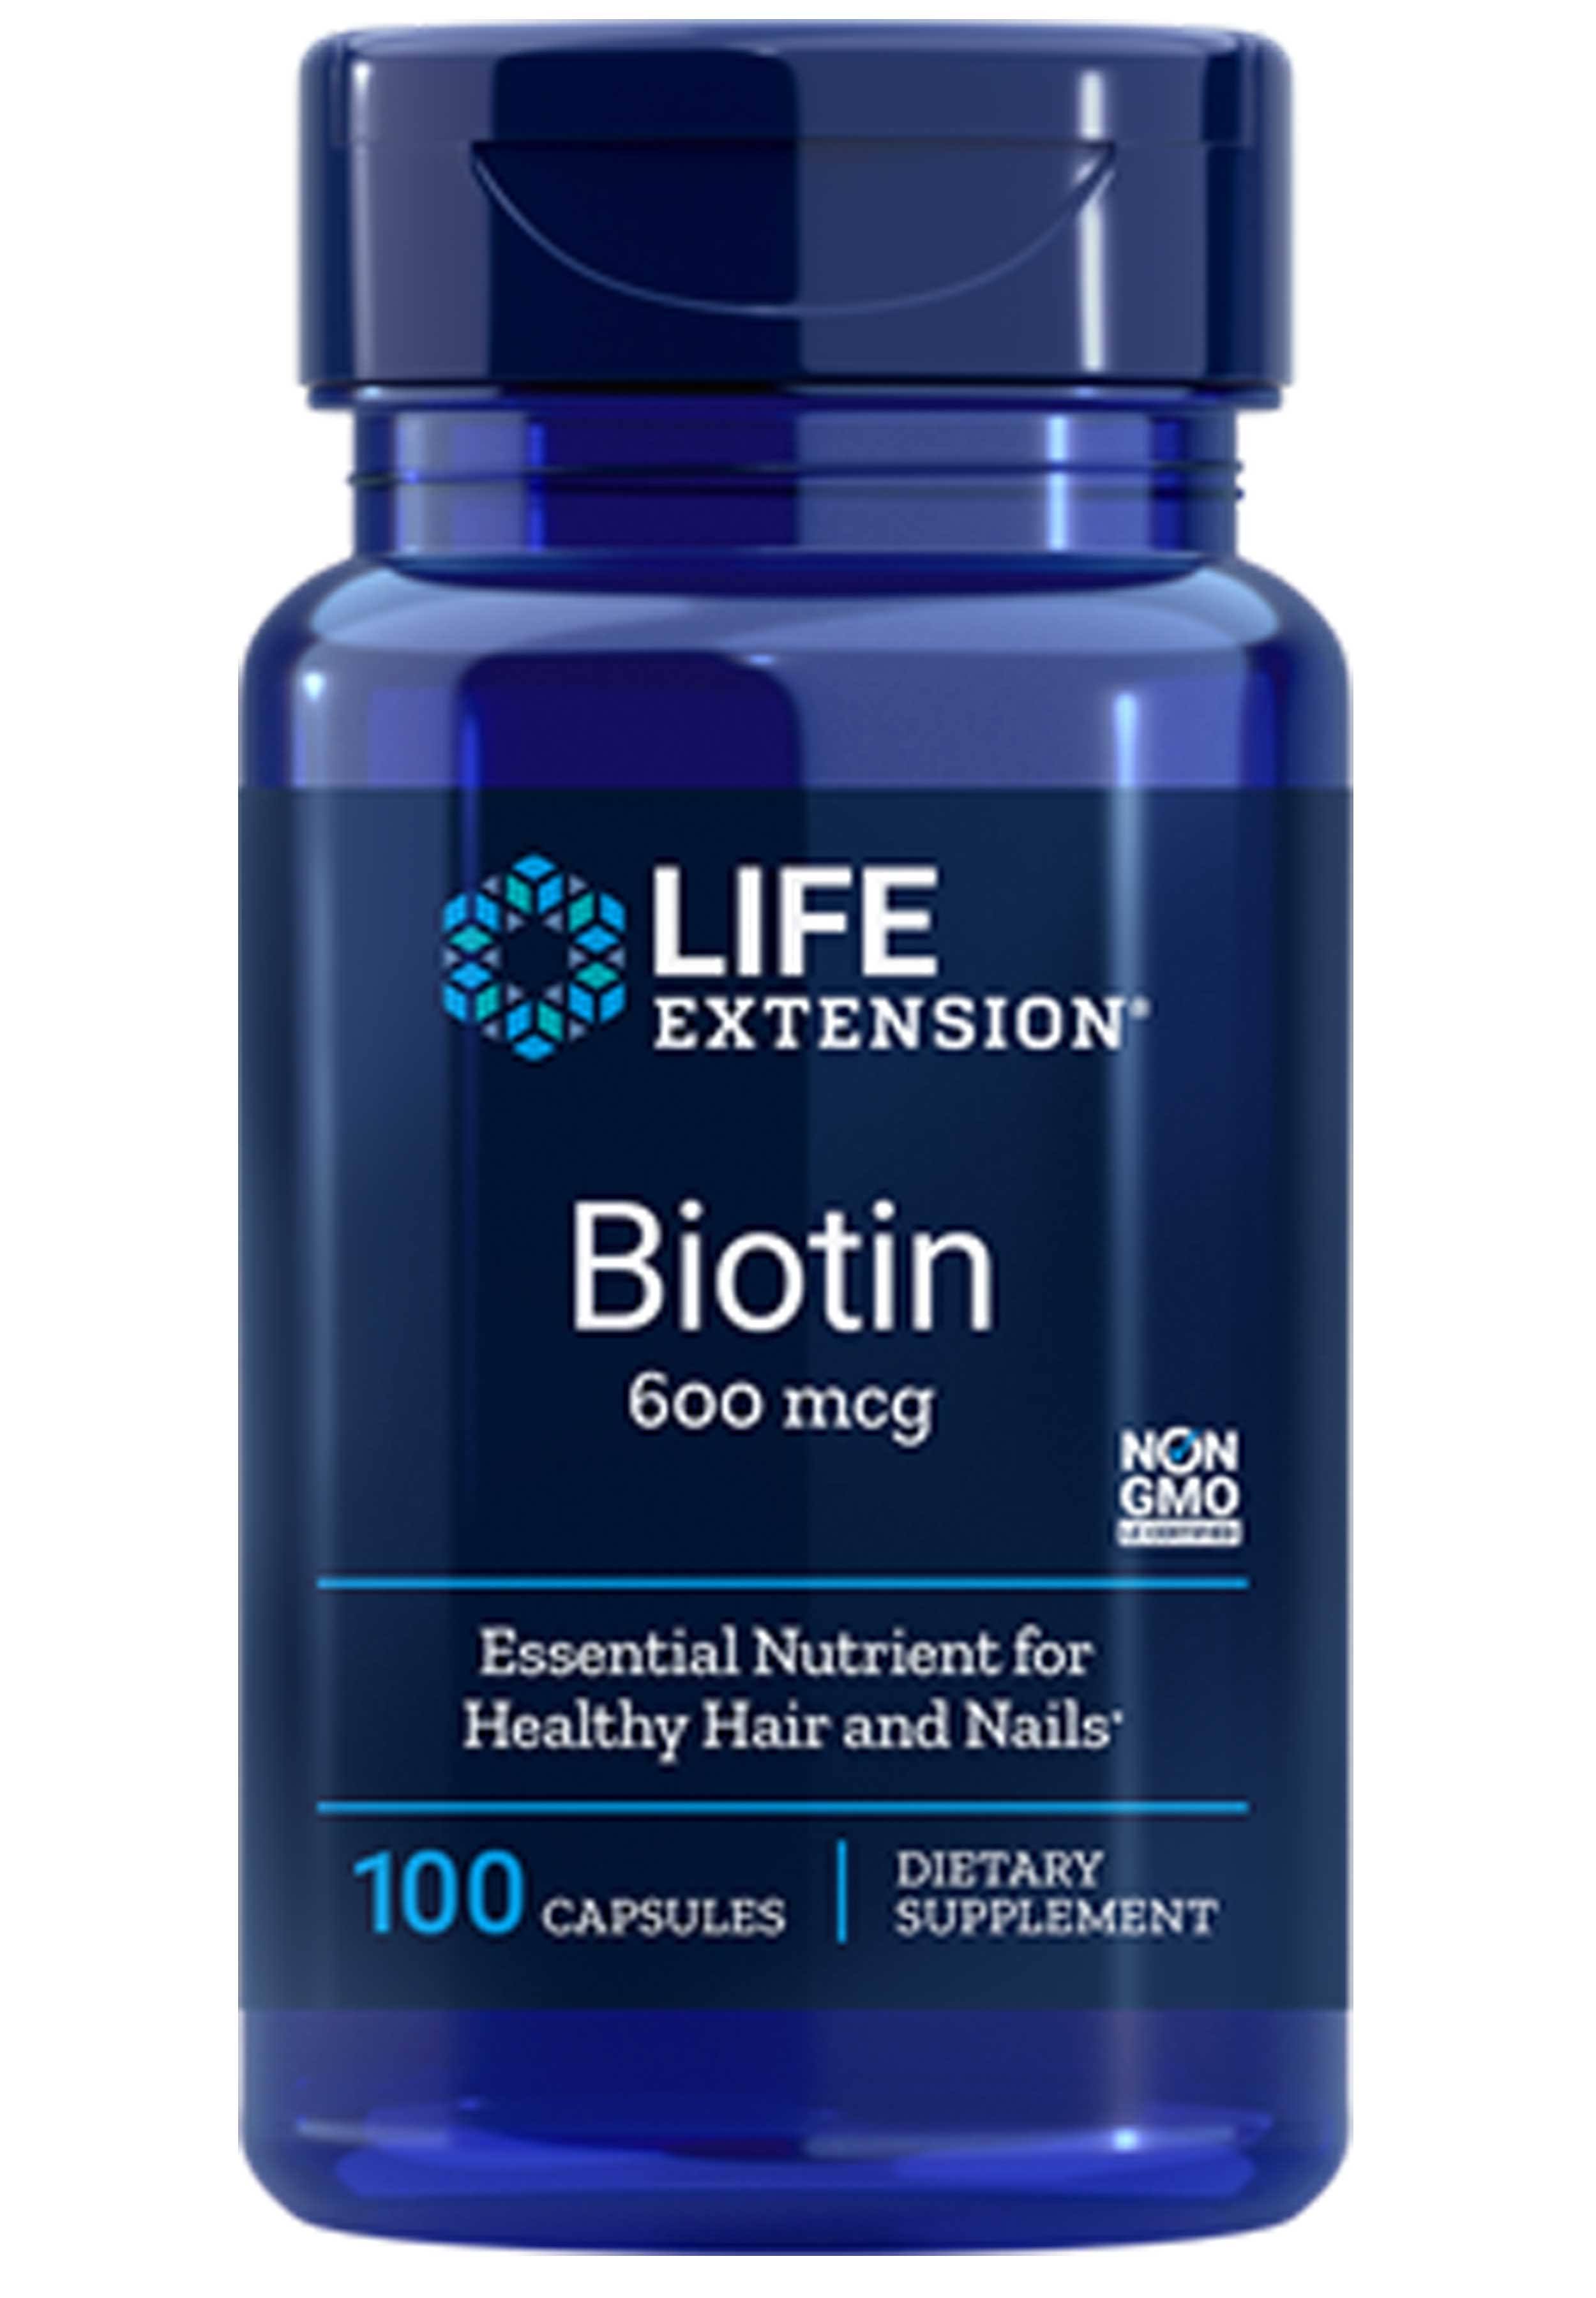 Life Extension Biotin Dietary Supplement - 600mcg, 100ct